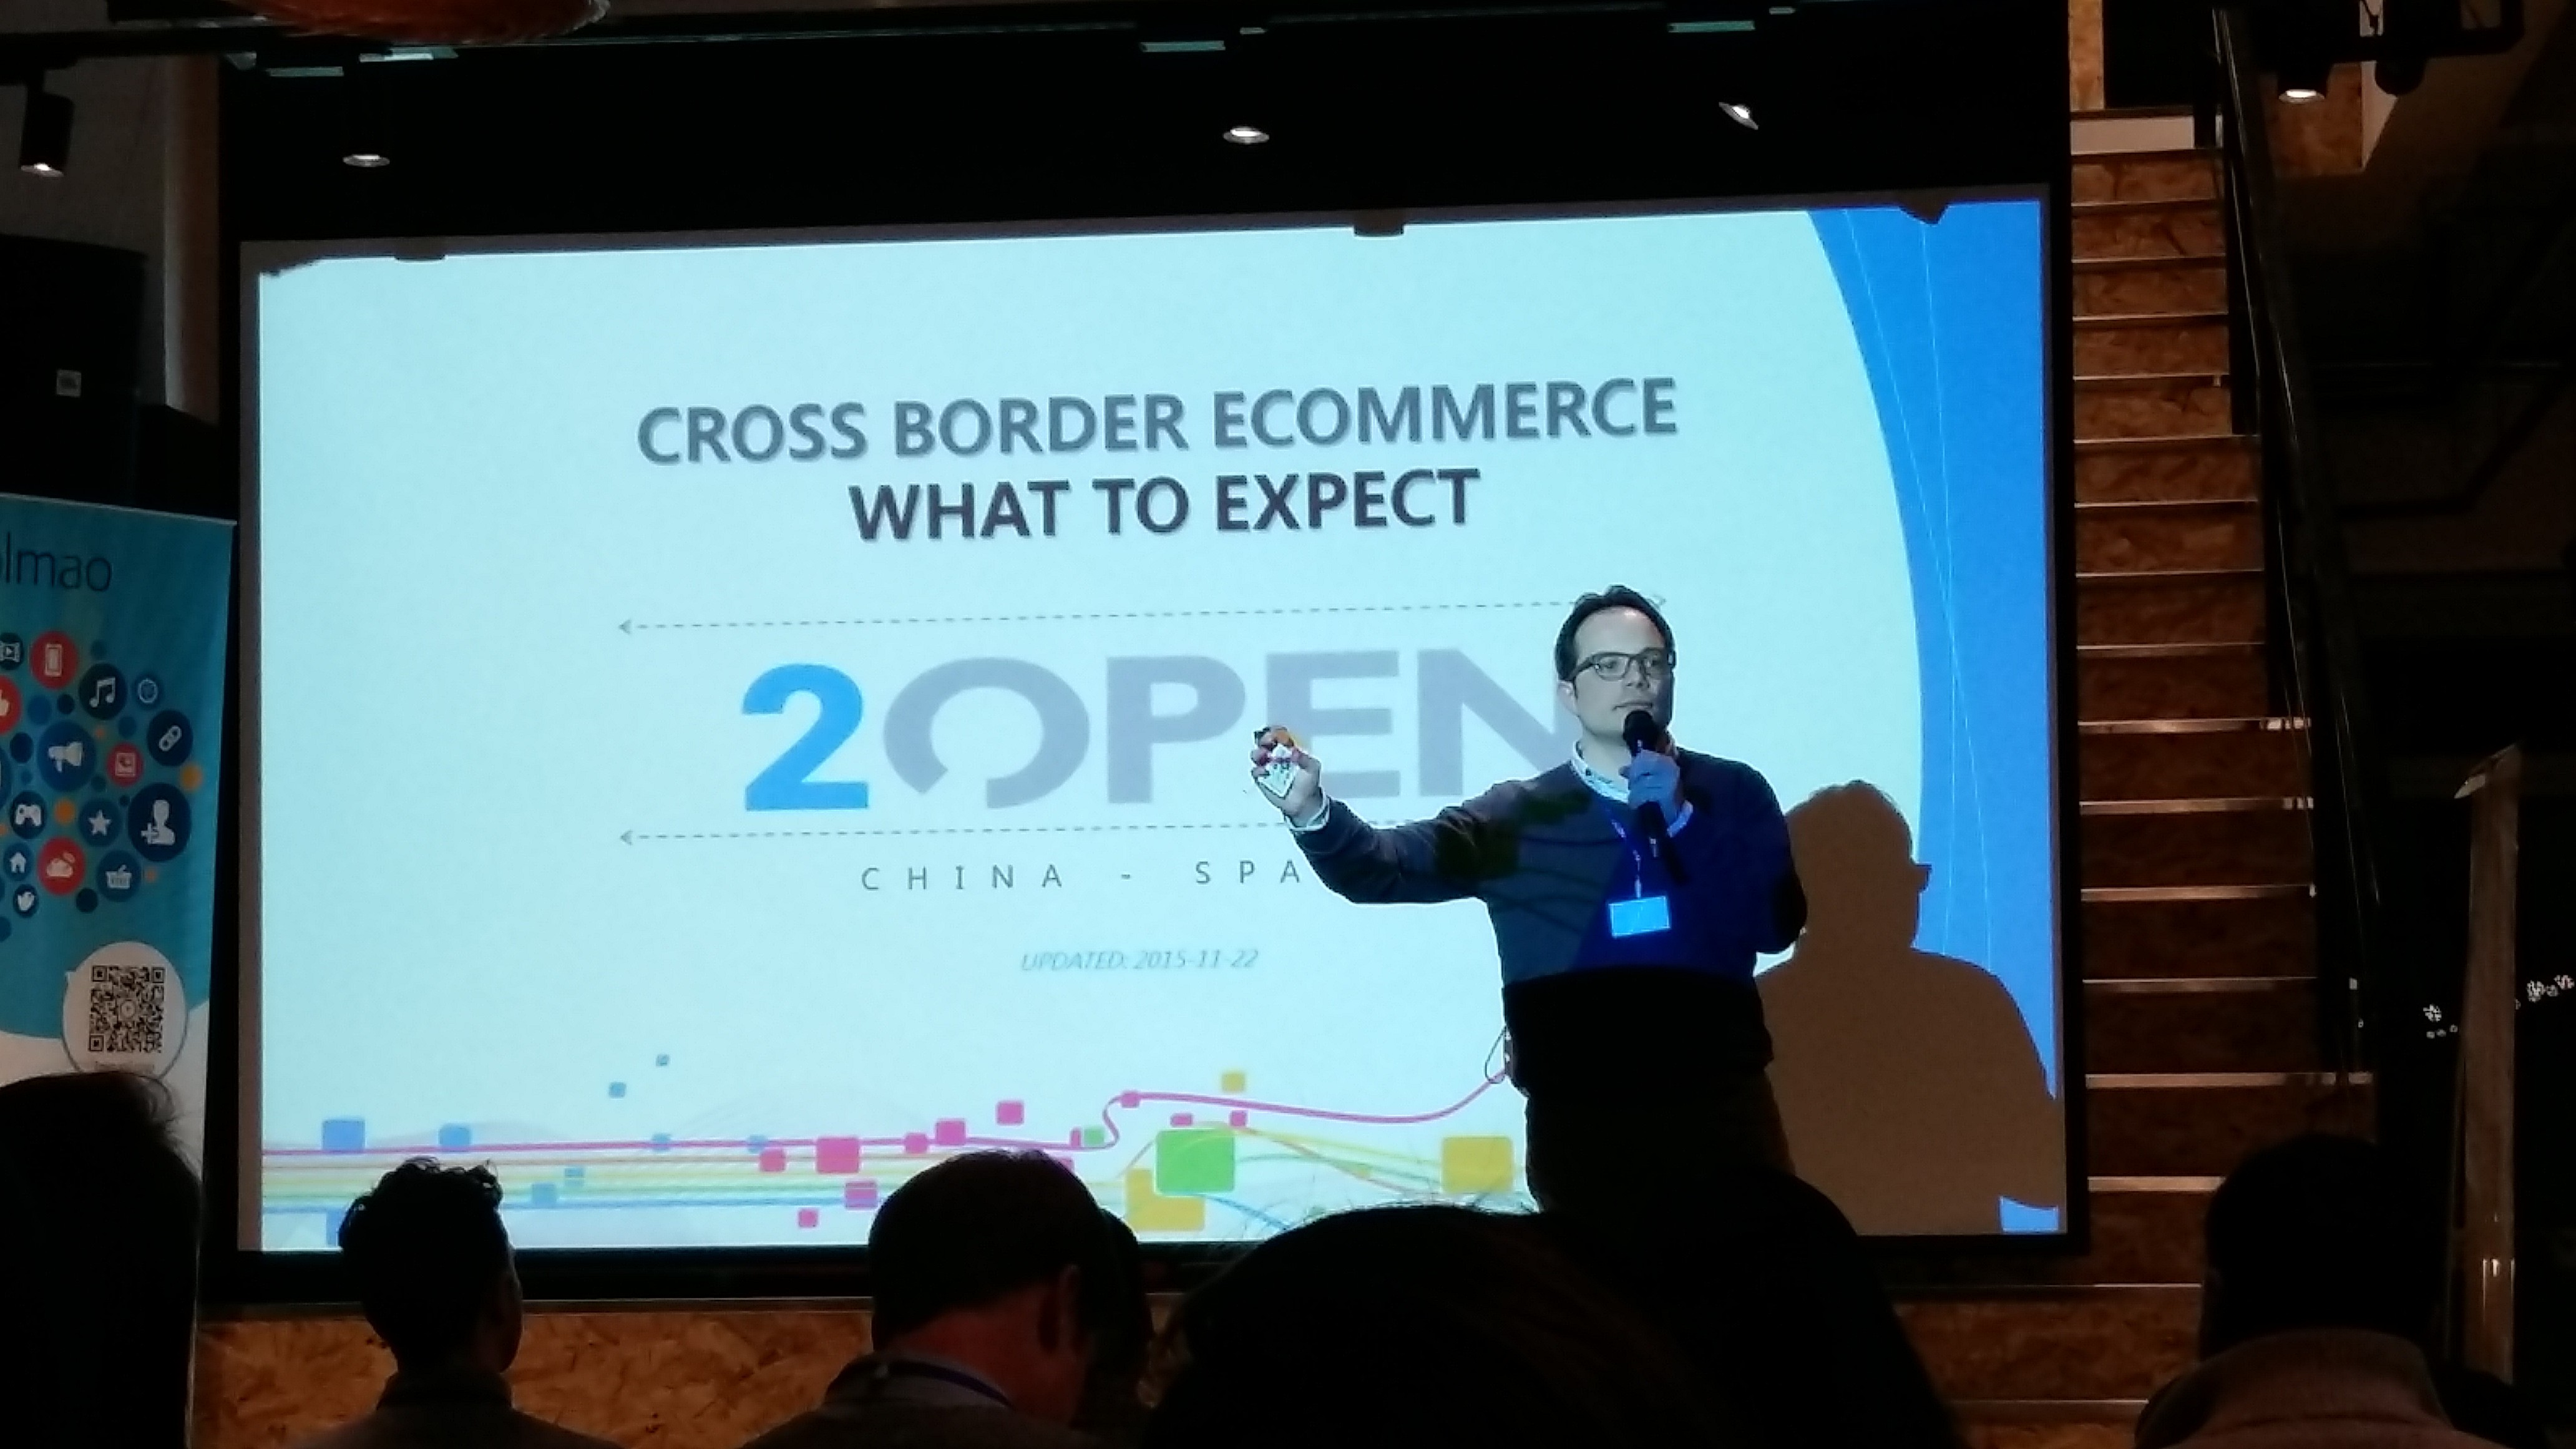 Digital Marketing in China. Where do I start?